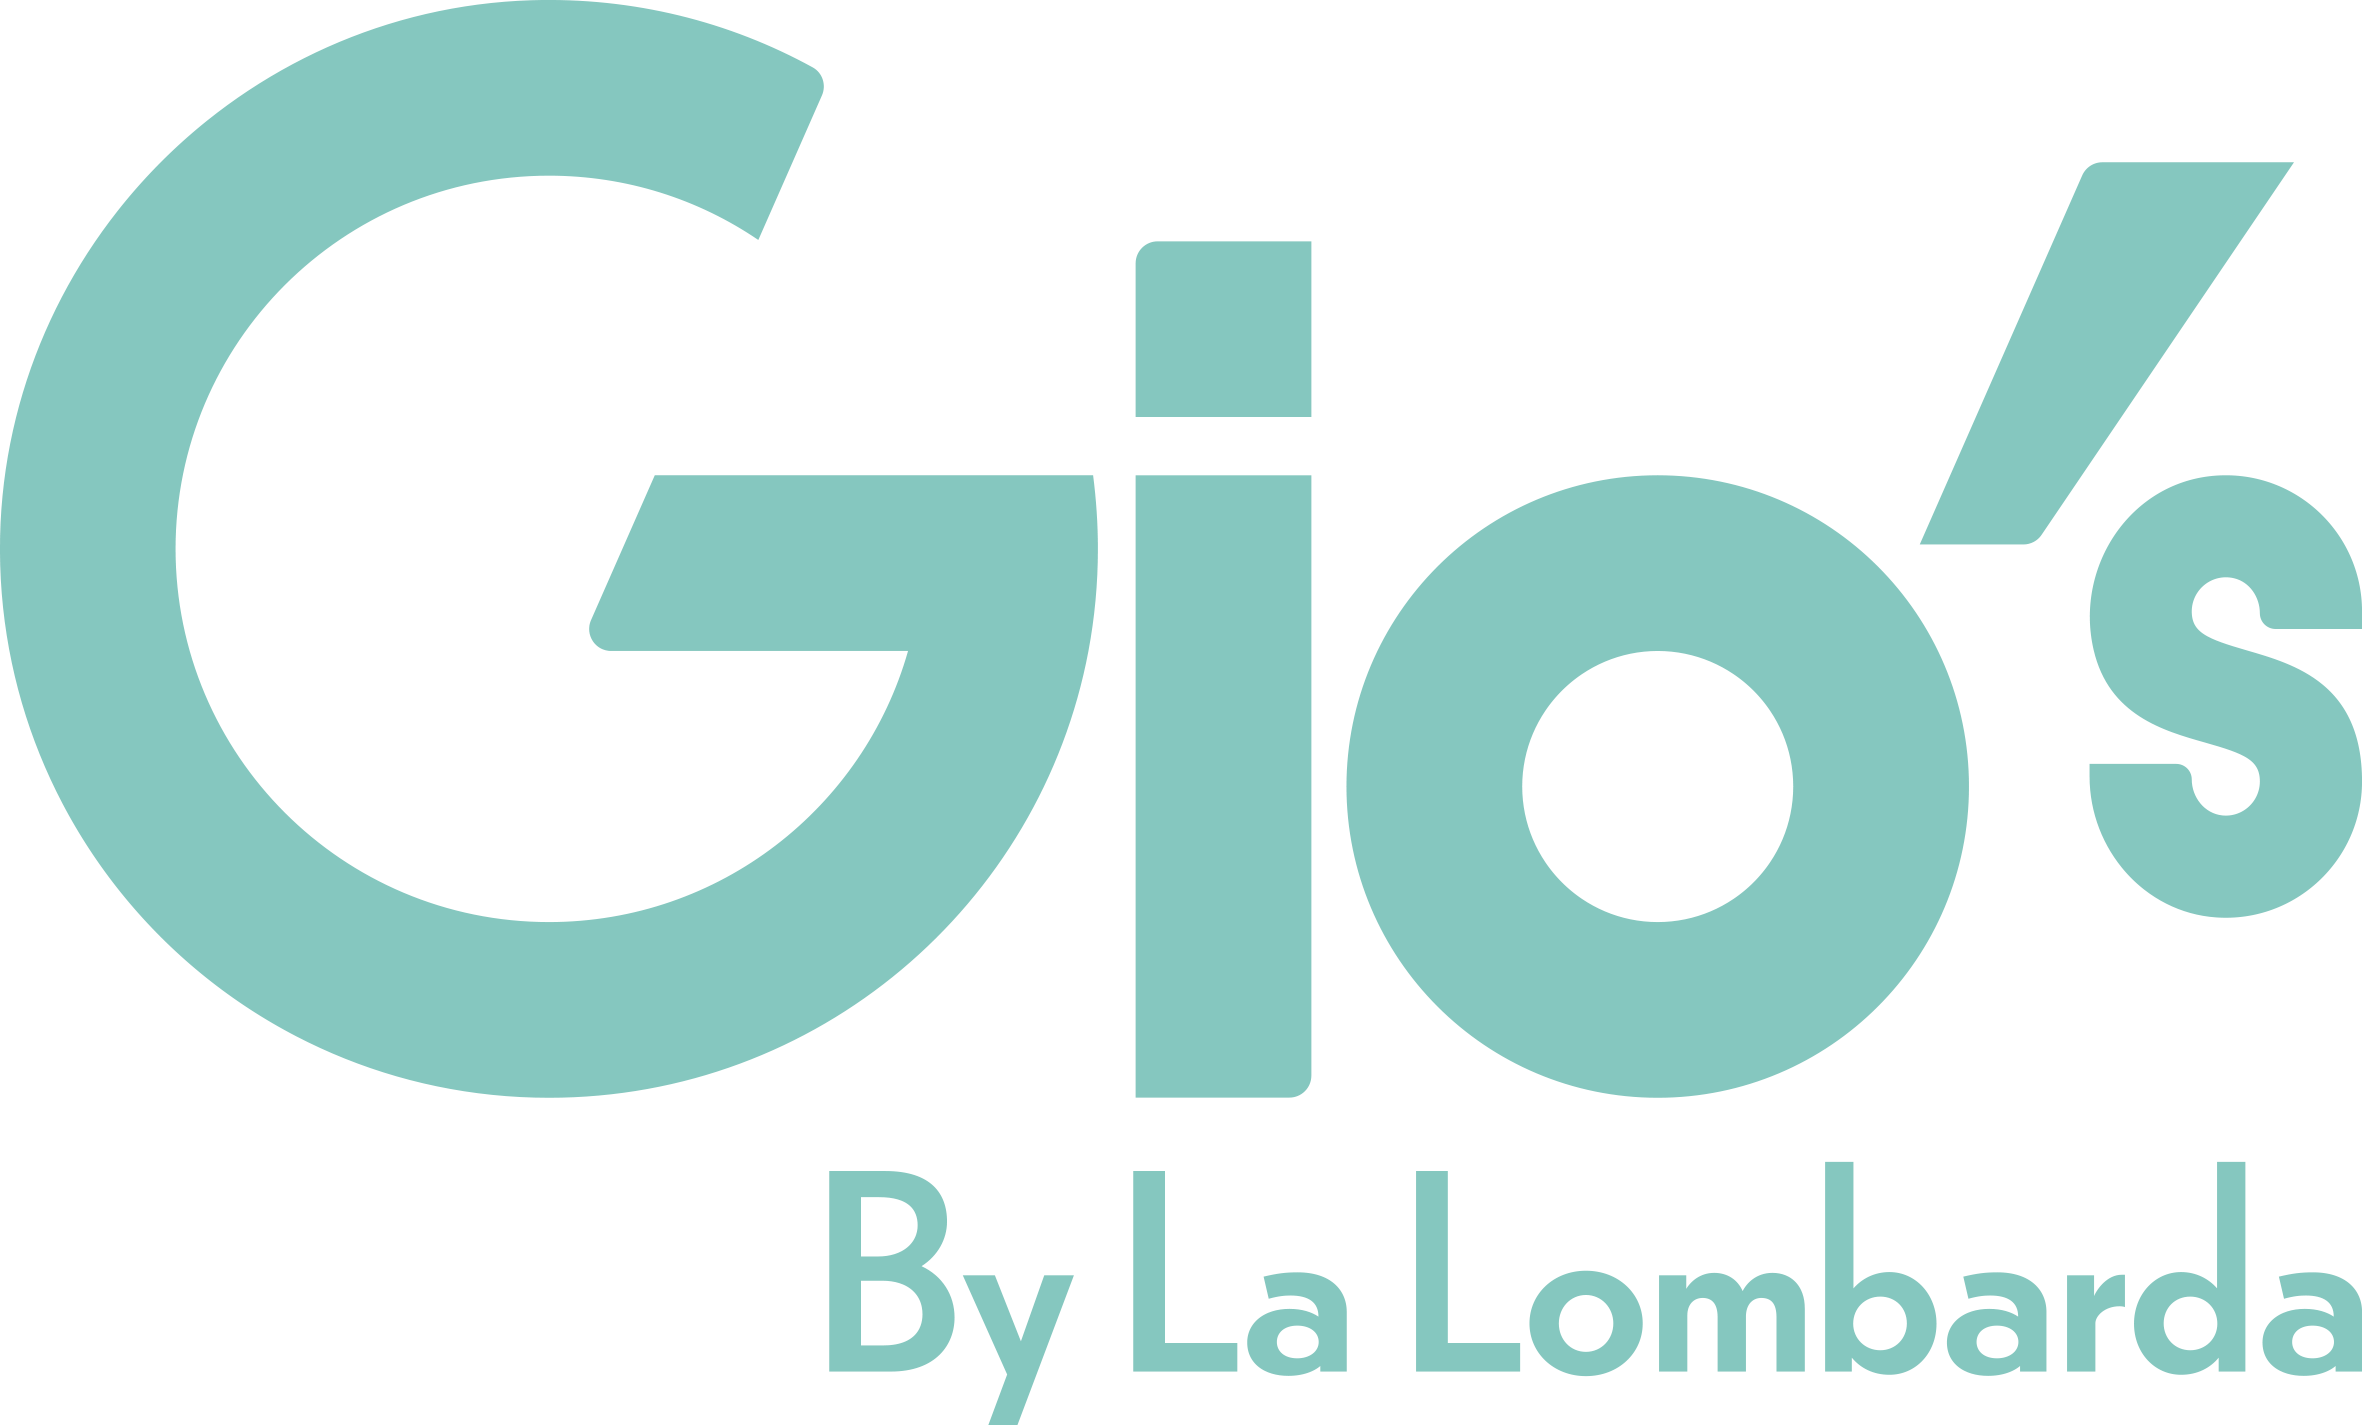 Gio's by La Lombarda